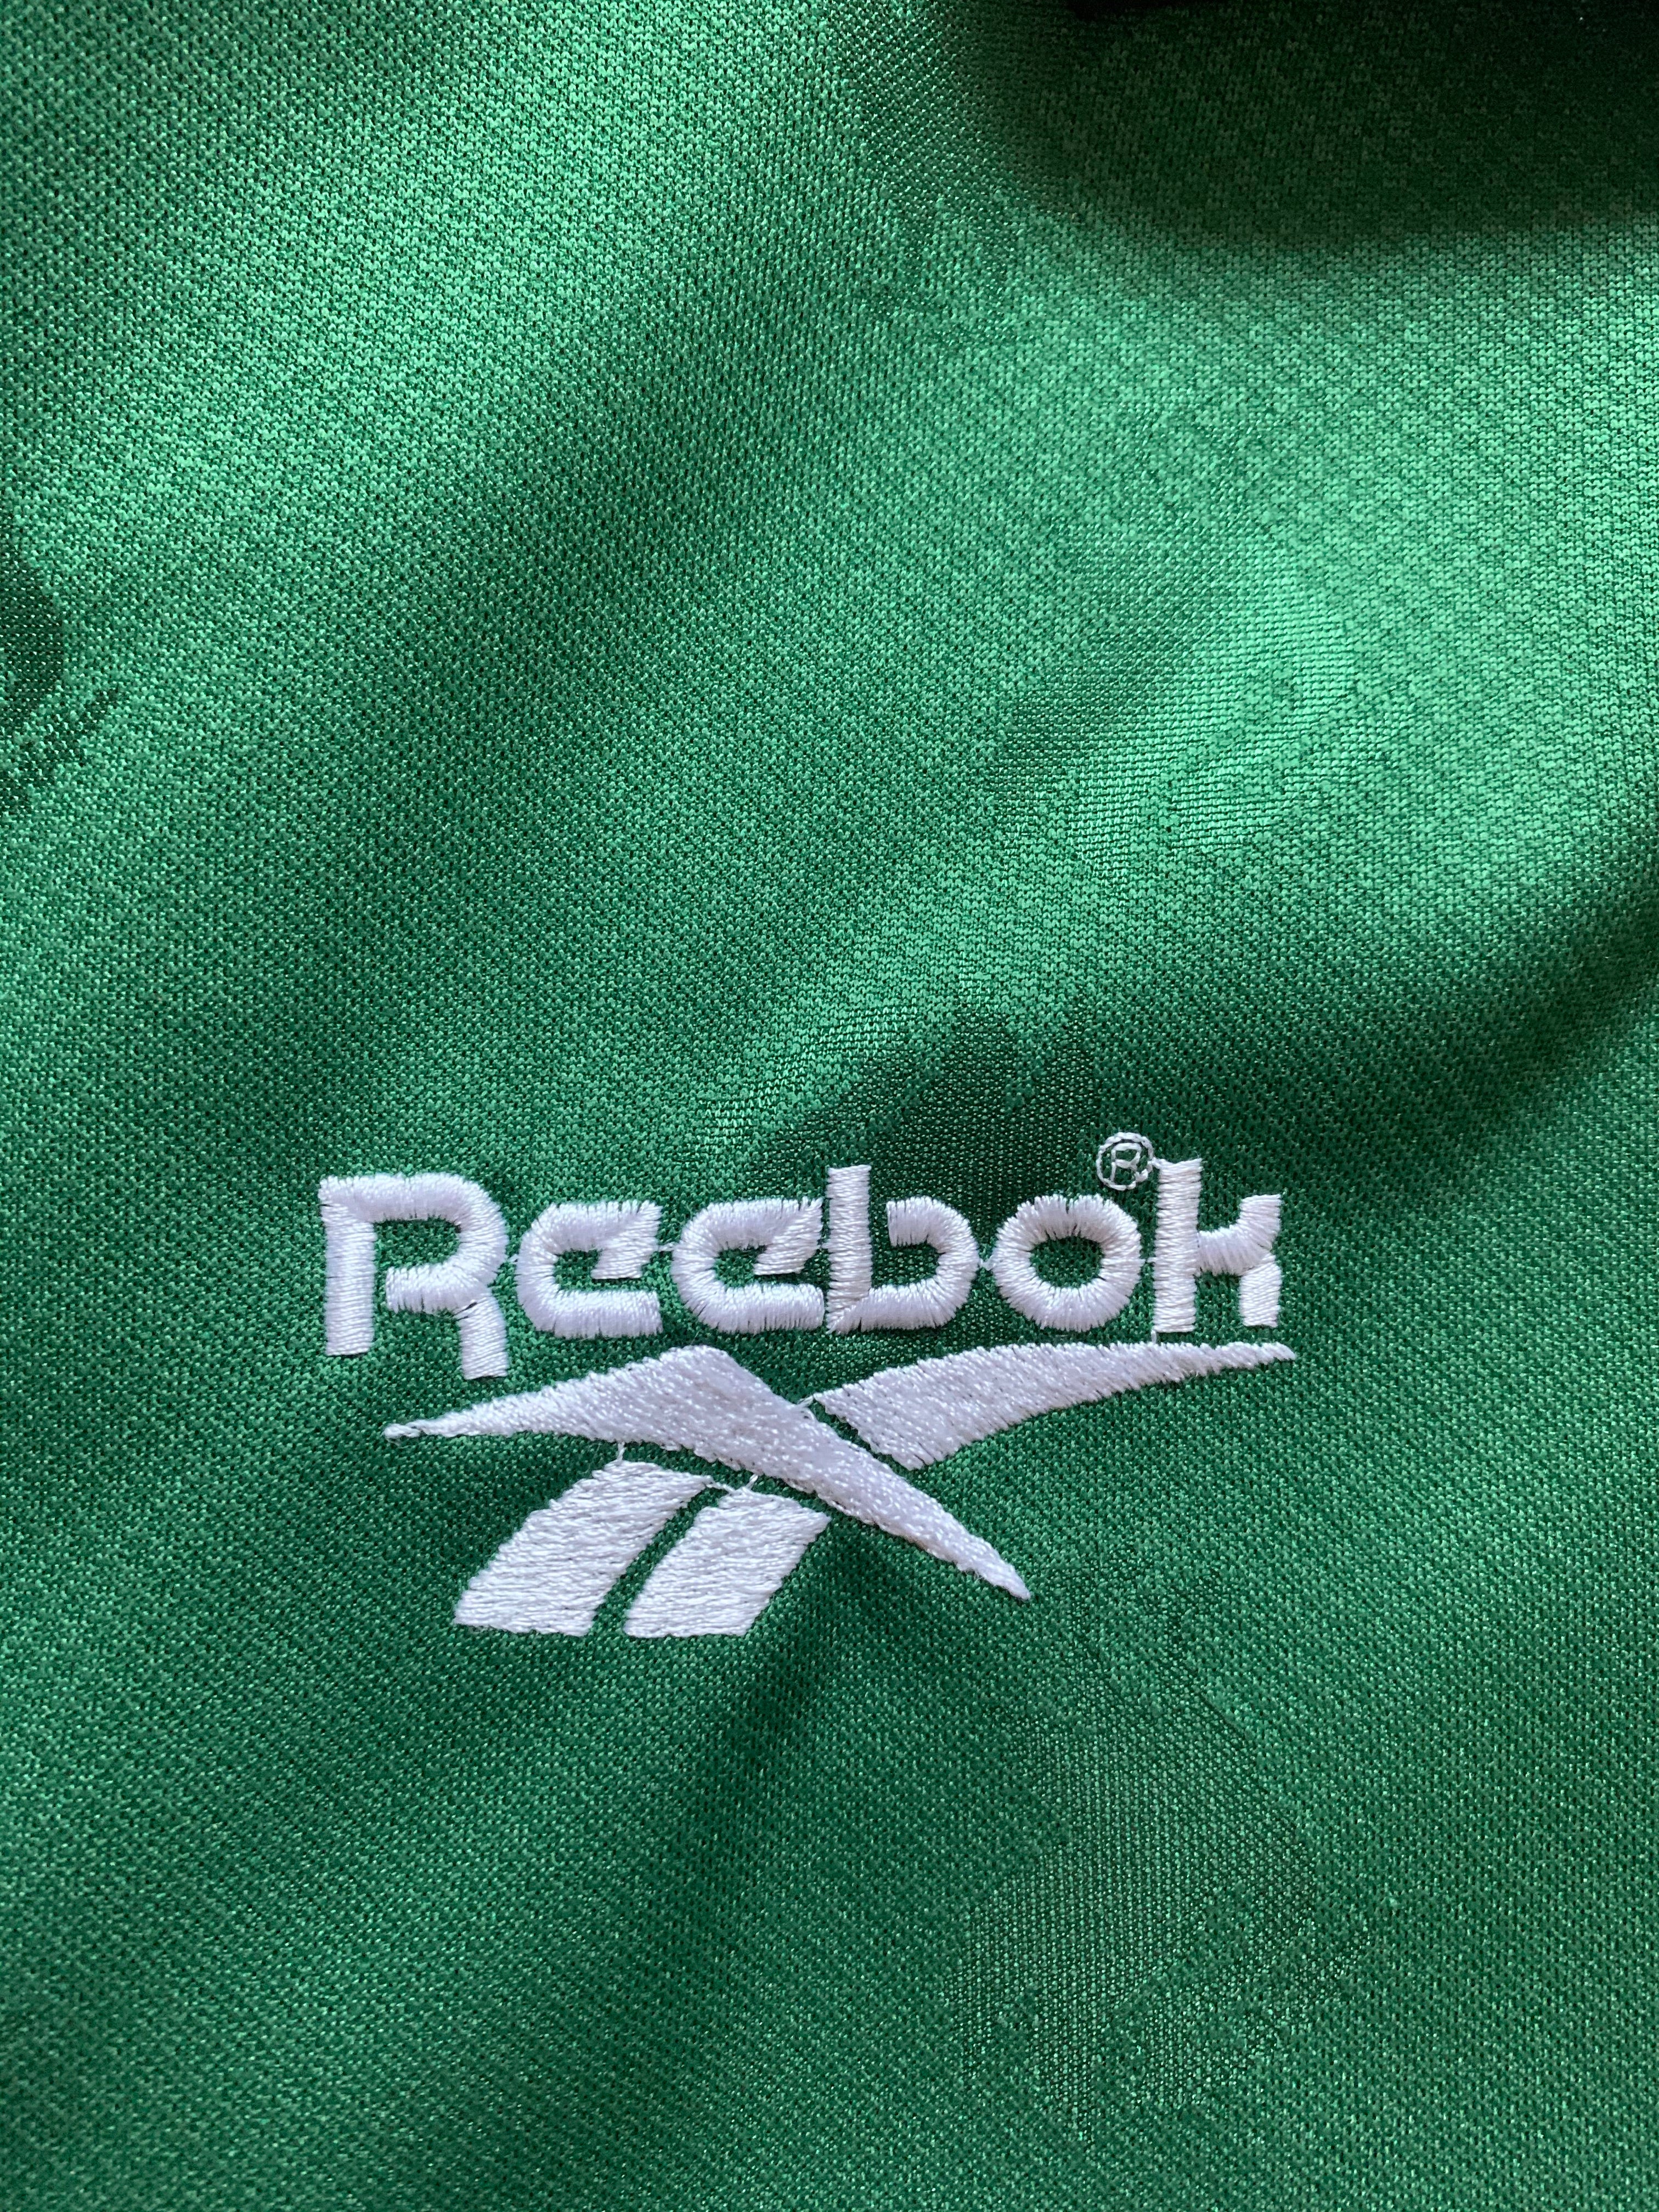 1996/97 Liverpool GK Shirt (S) 9/10